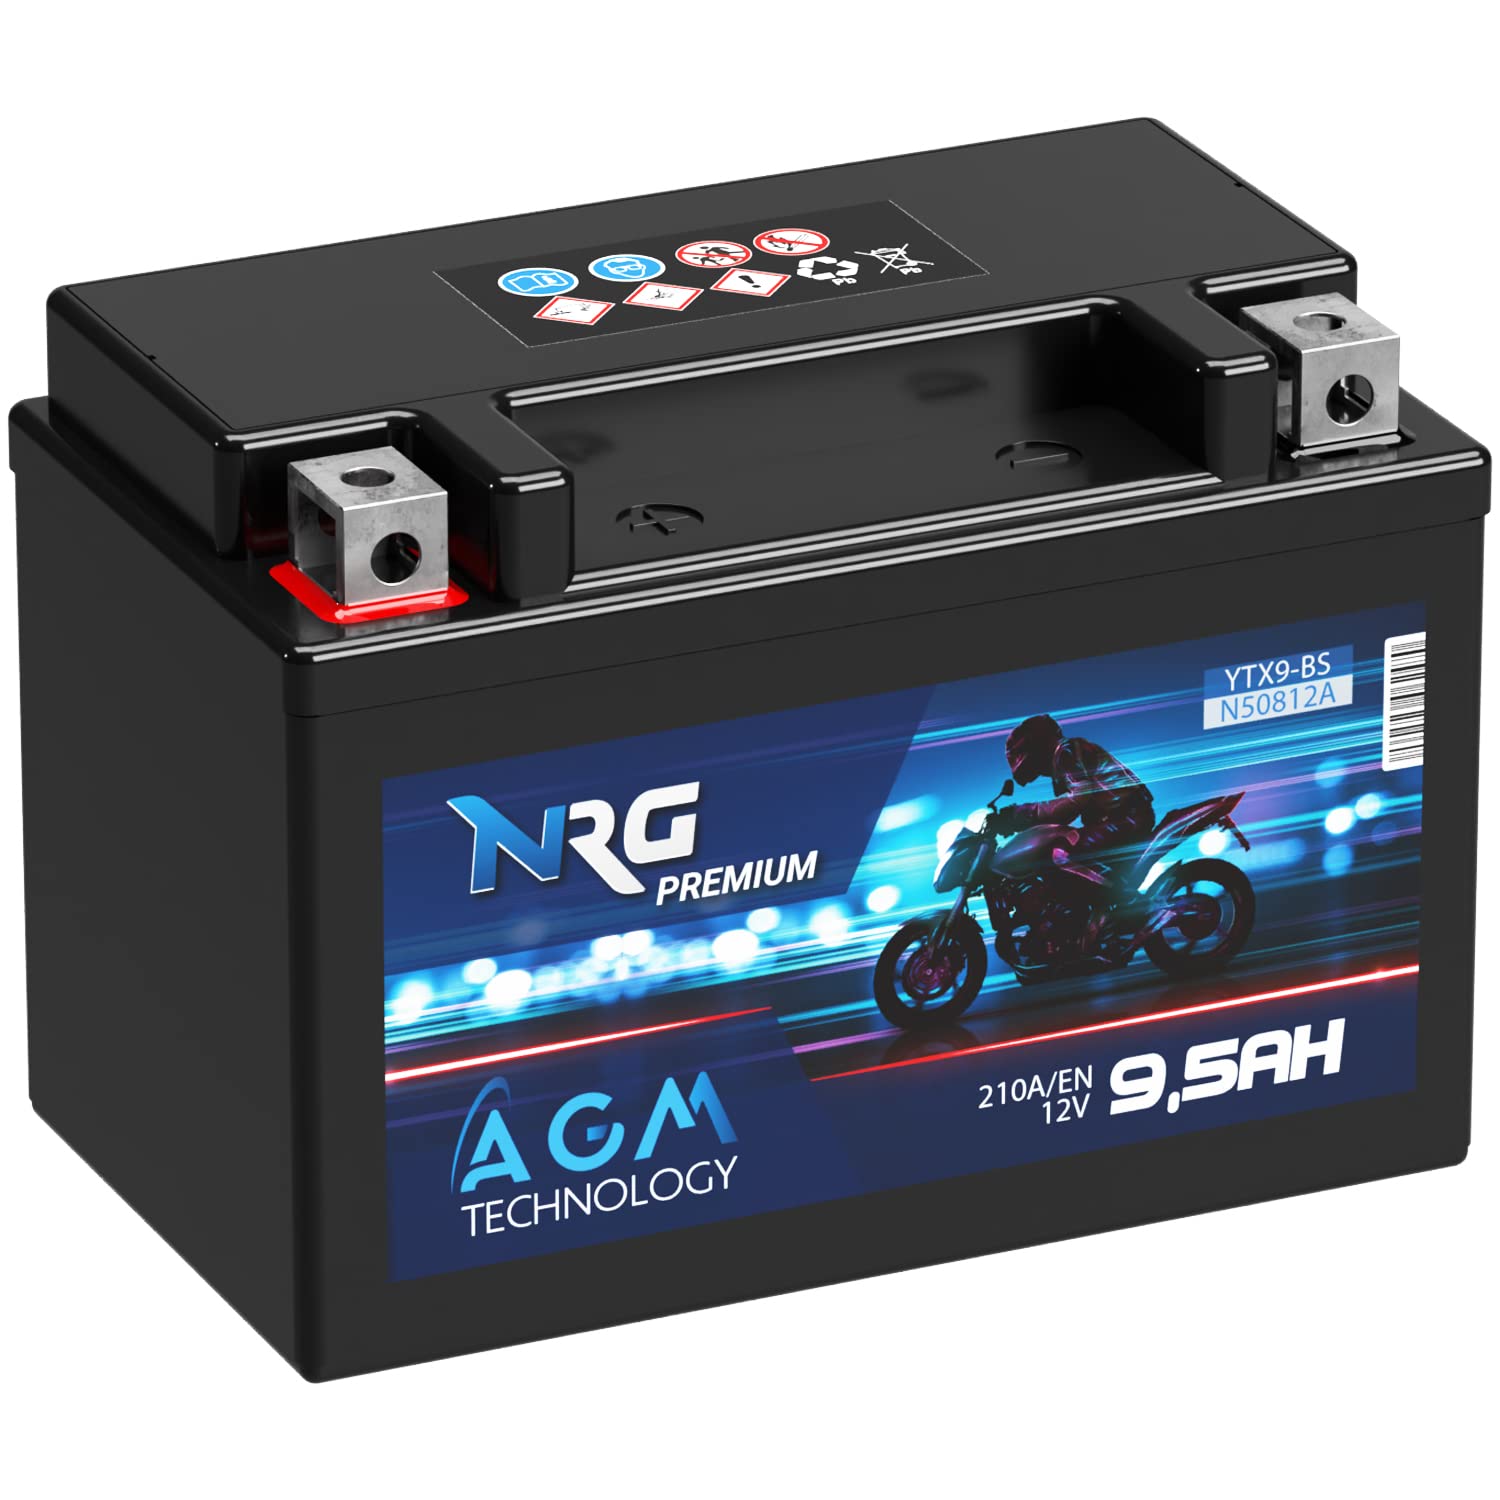 NRG Premium YTX9-BS AGM Motorradbatterie 12V 9,5Ah 210A/EN entspricht Batterie 50812 CTX9-BS ETX9-BS GTX9-BS auslaufsicher wartungsfrei ersetzt 9Ah 8Ah von NRG PREMIUM